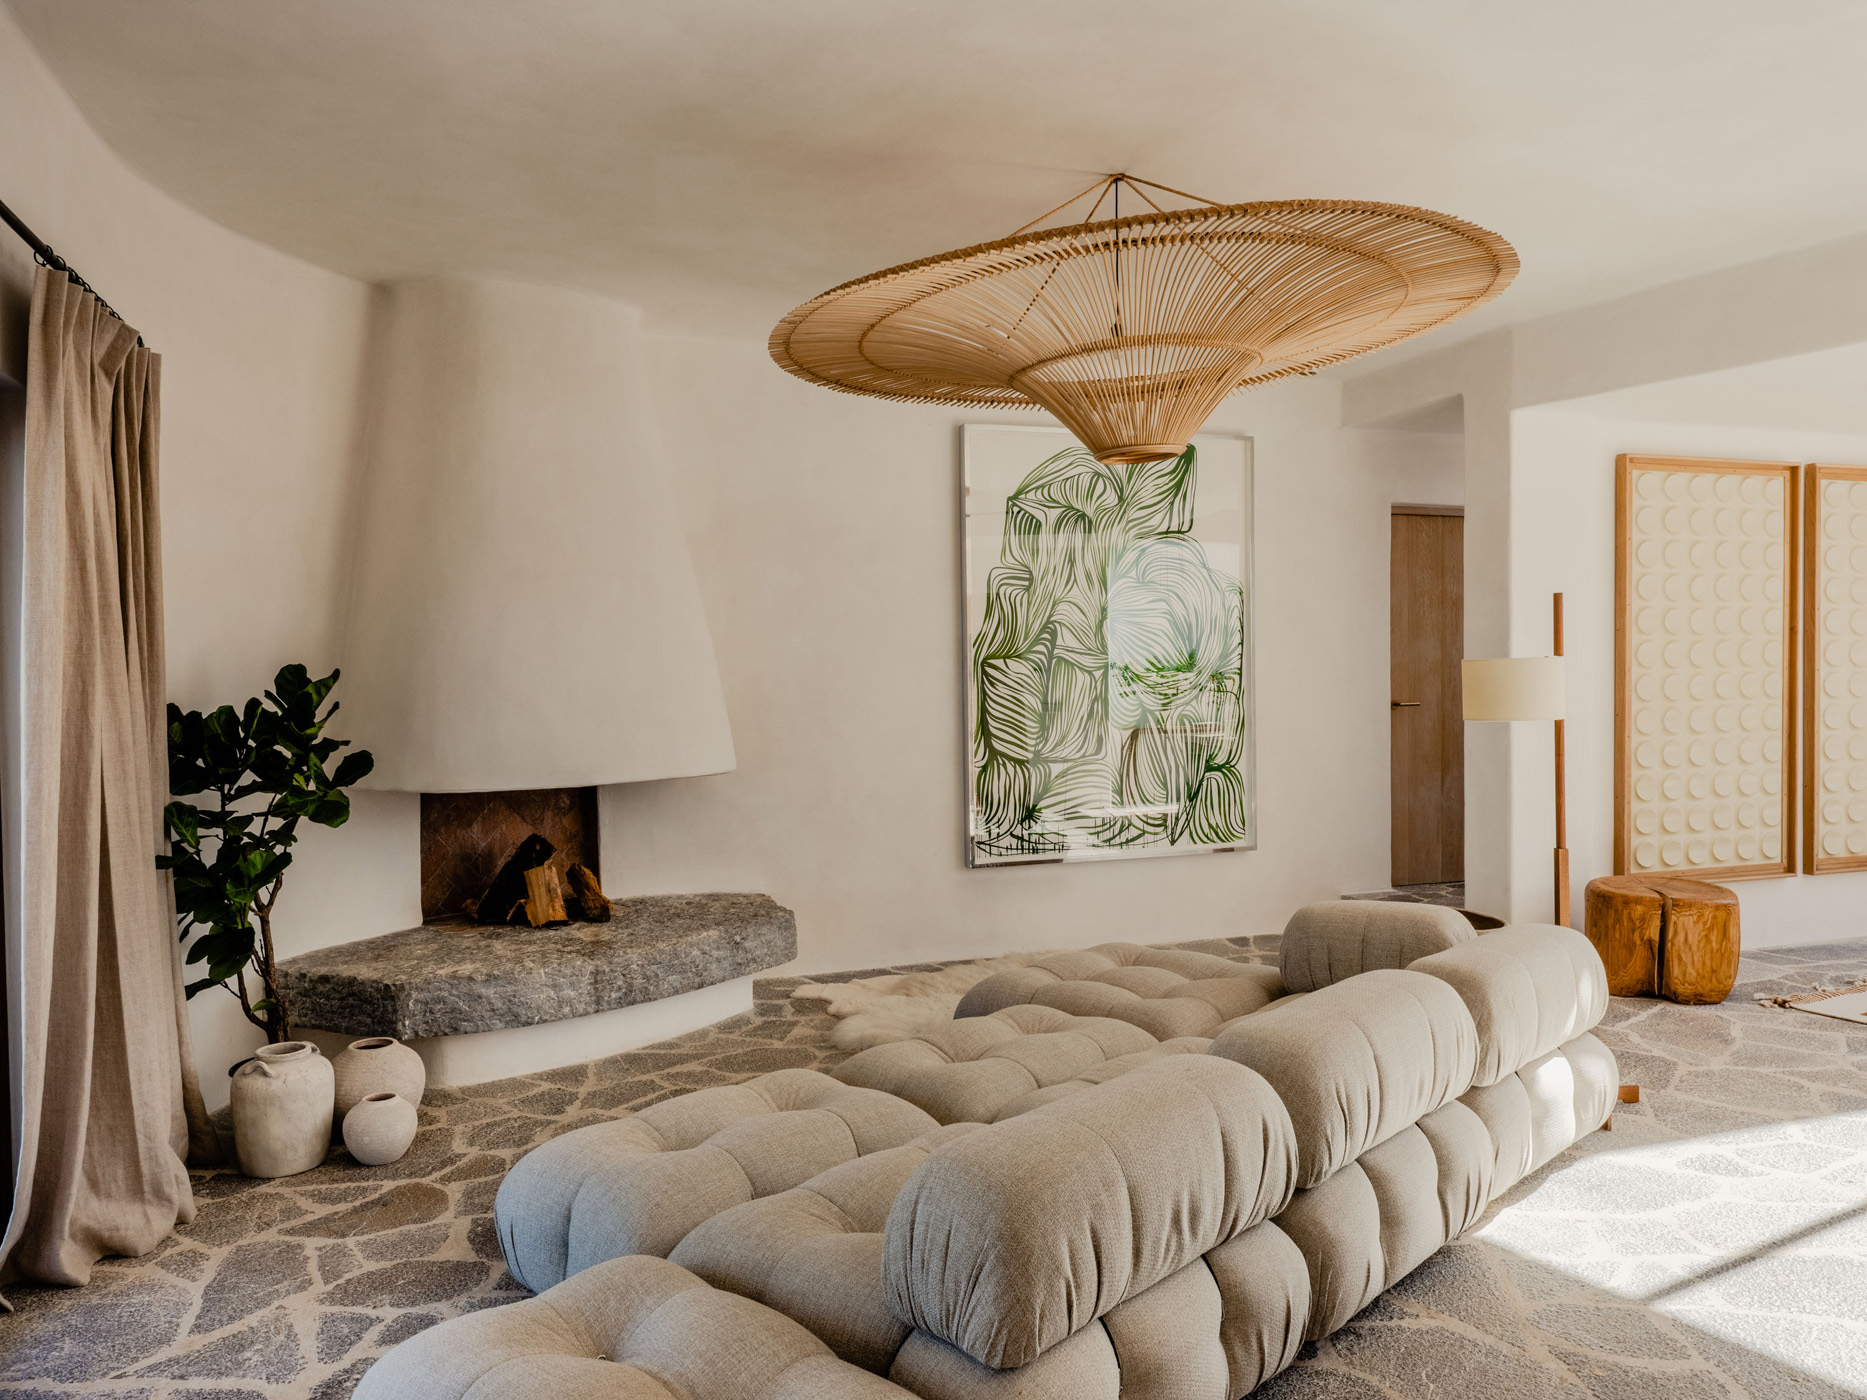 Casa del Arbol living room with custom-made stone fireplace